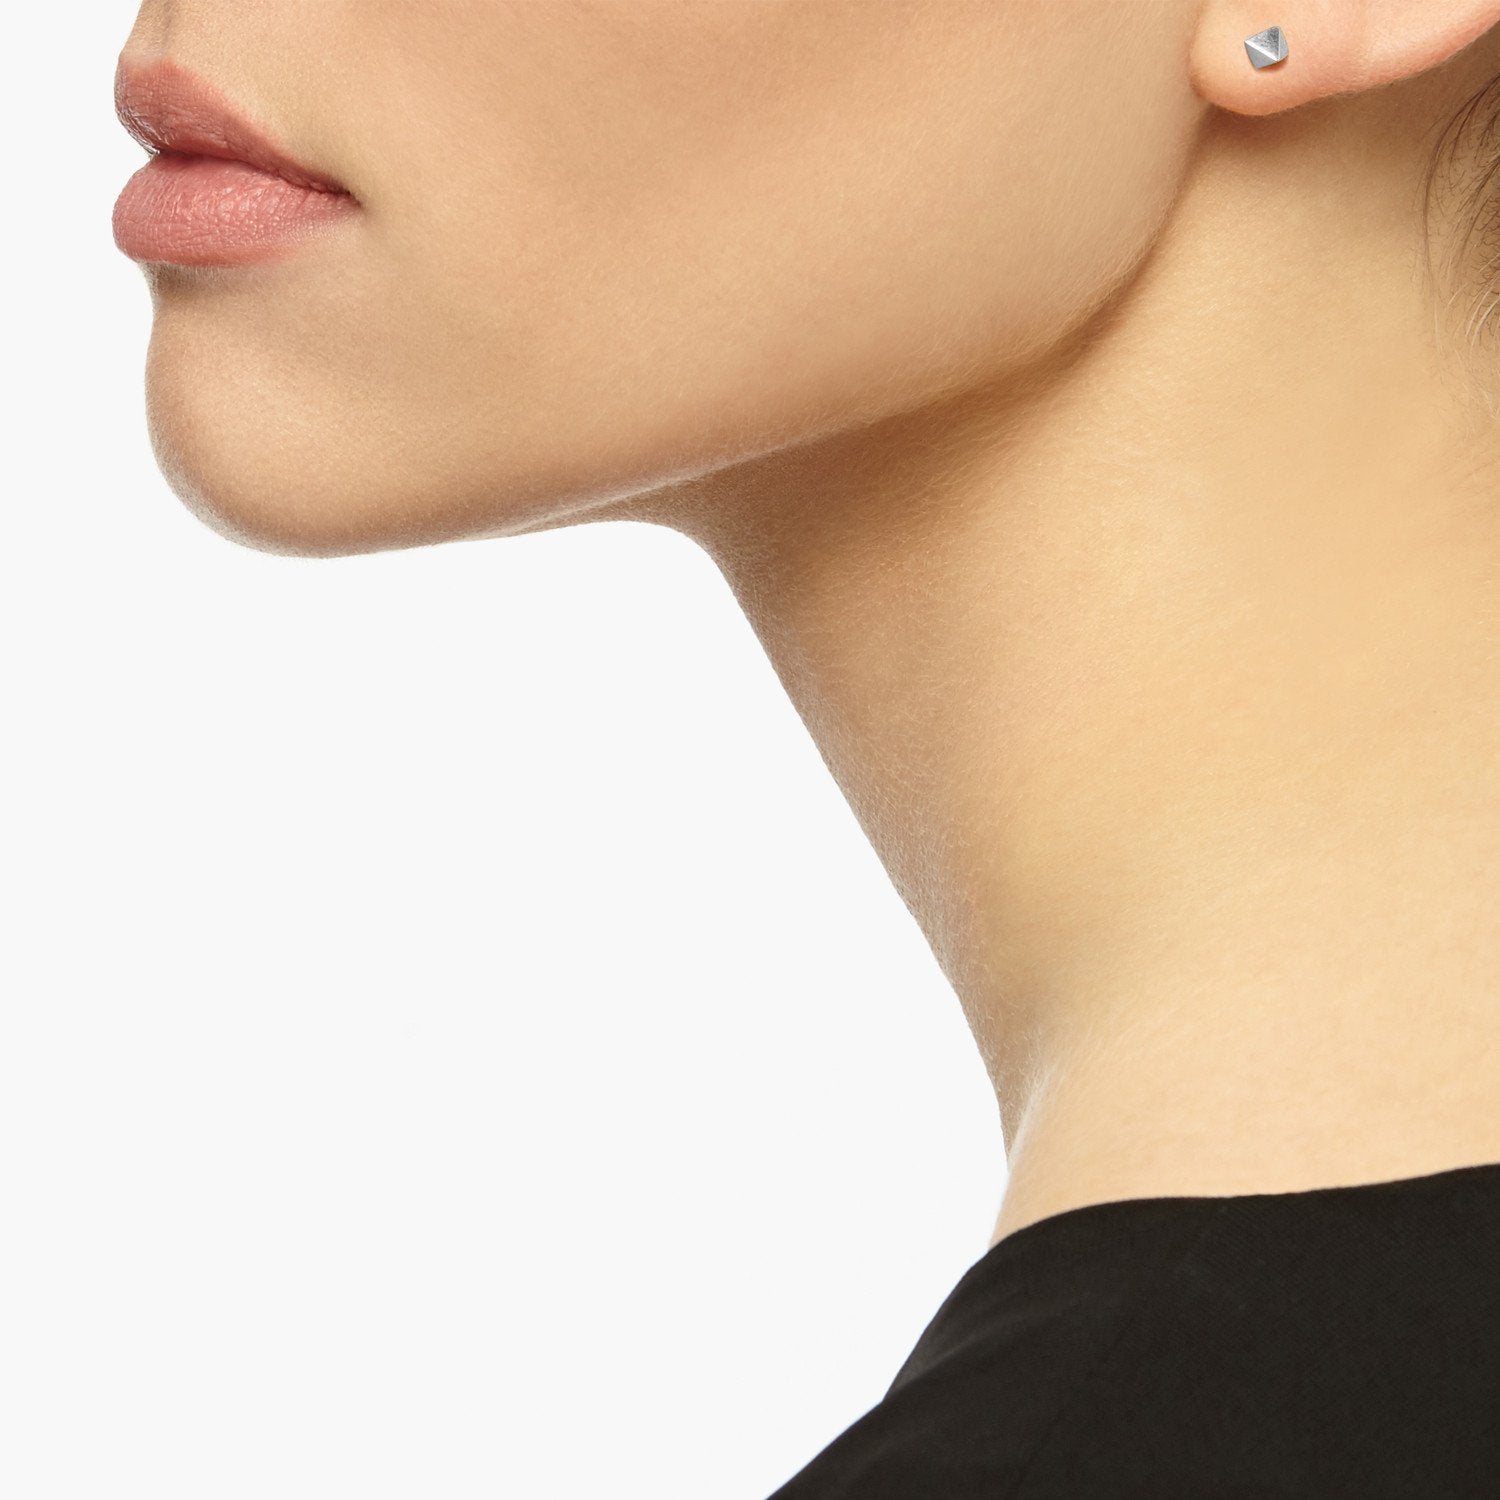 Octahedron Stud Earrings - Silver - Myia Bonner Jewellery